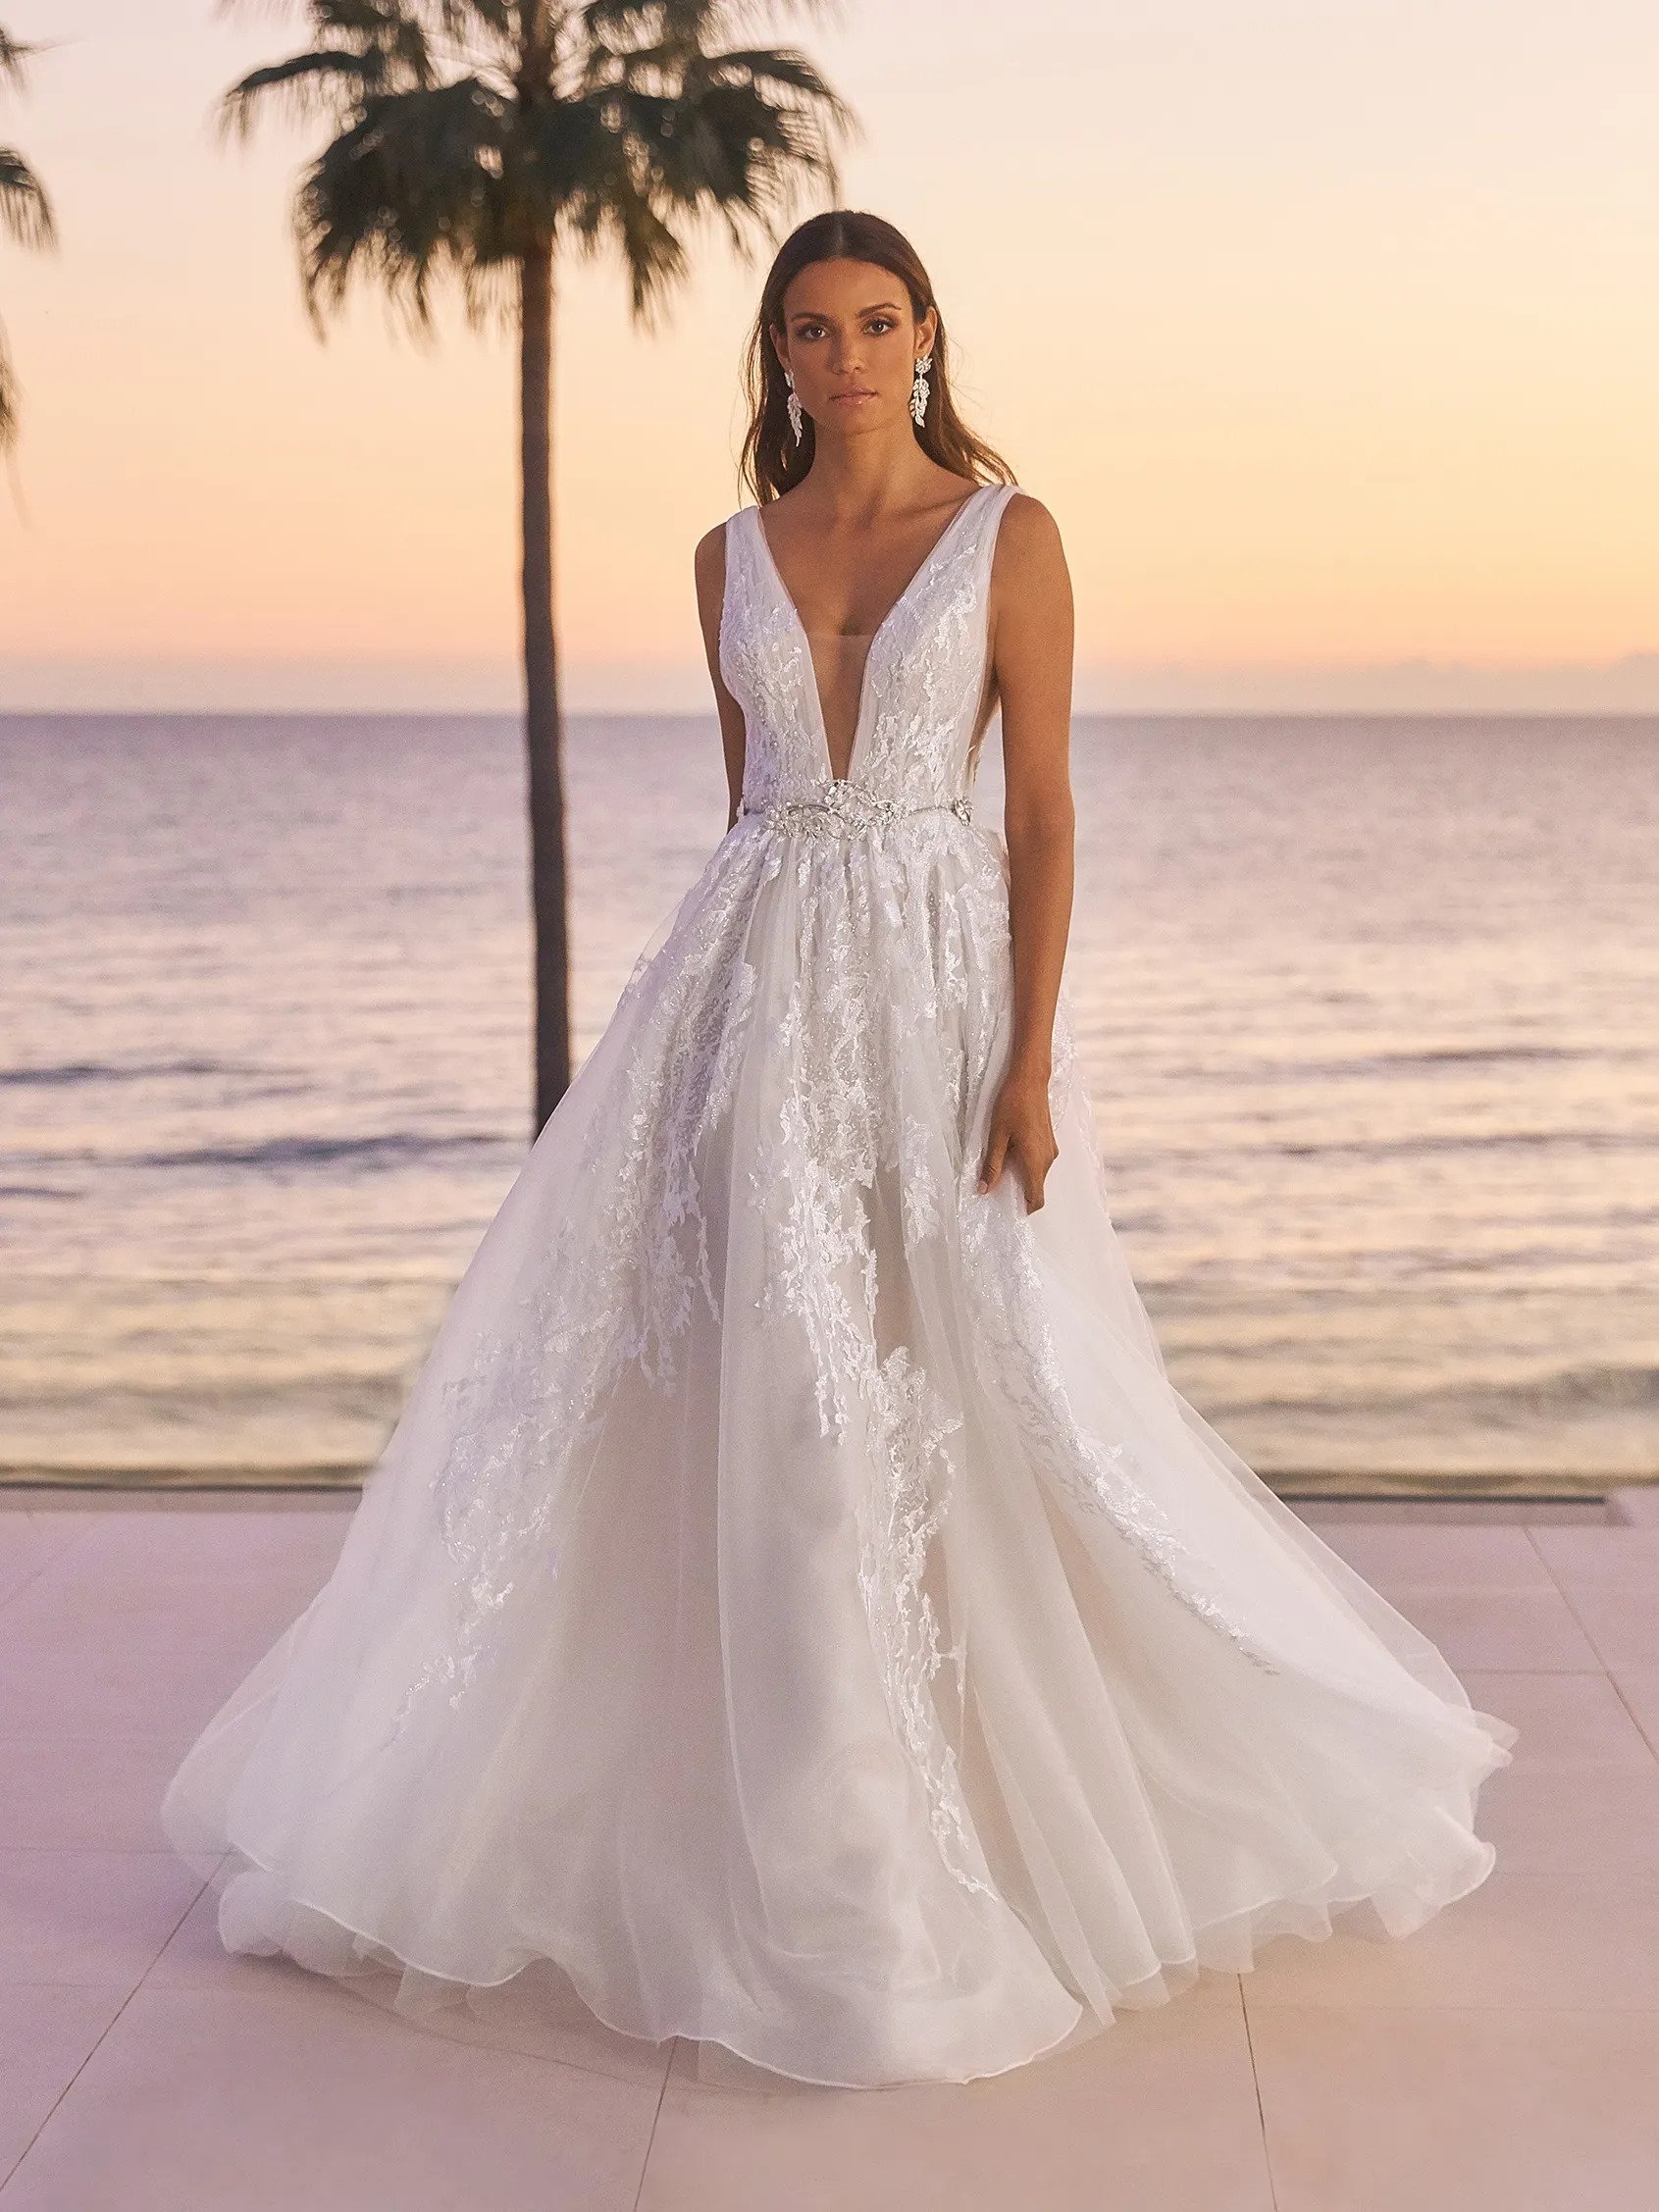 blanc-de-blanc-bridal-boutique-pittsburgh-dress-wedding-gown-tinka.jpg